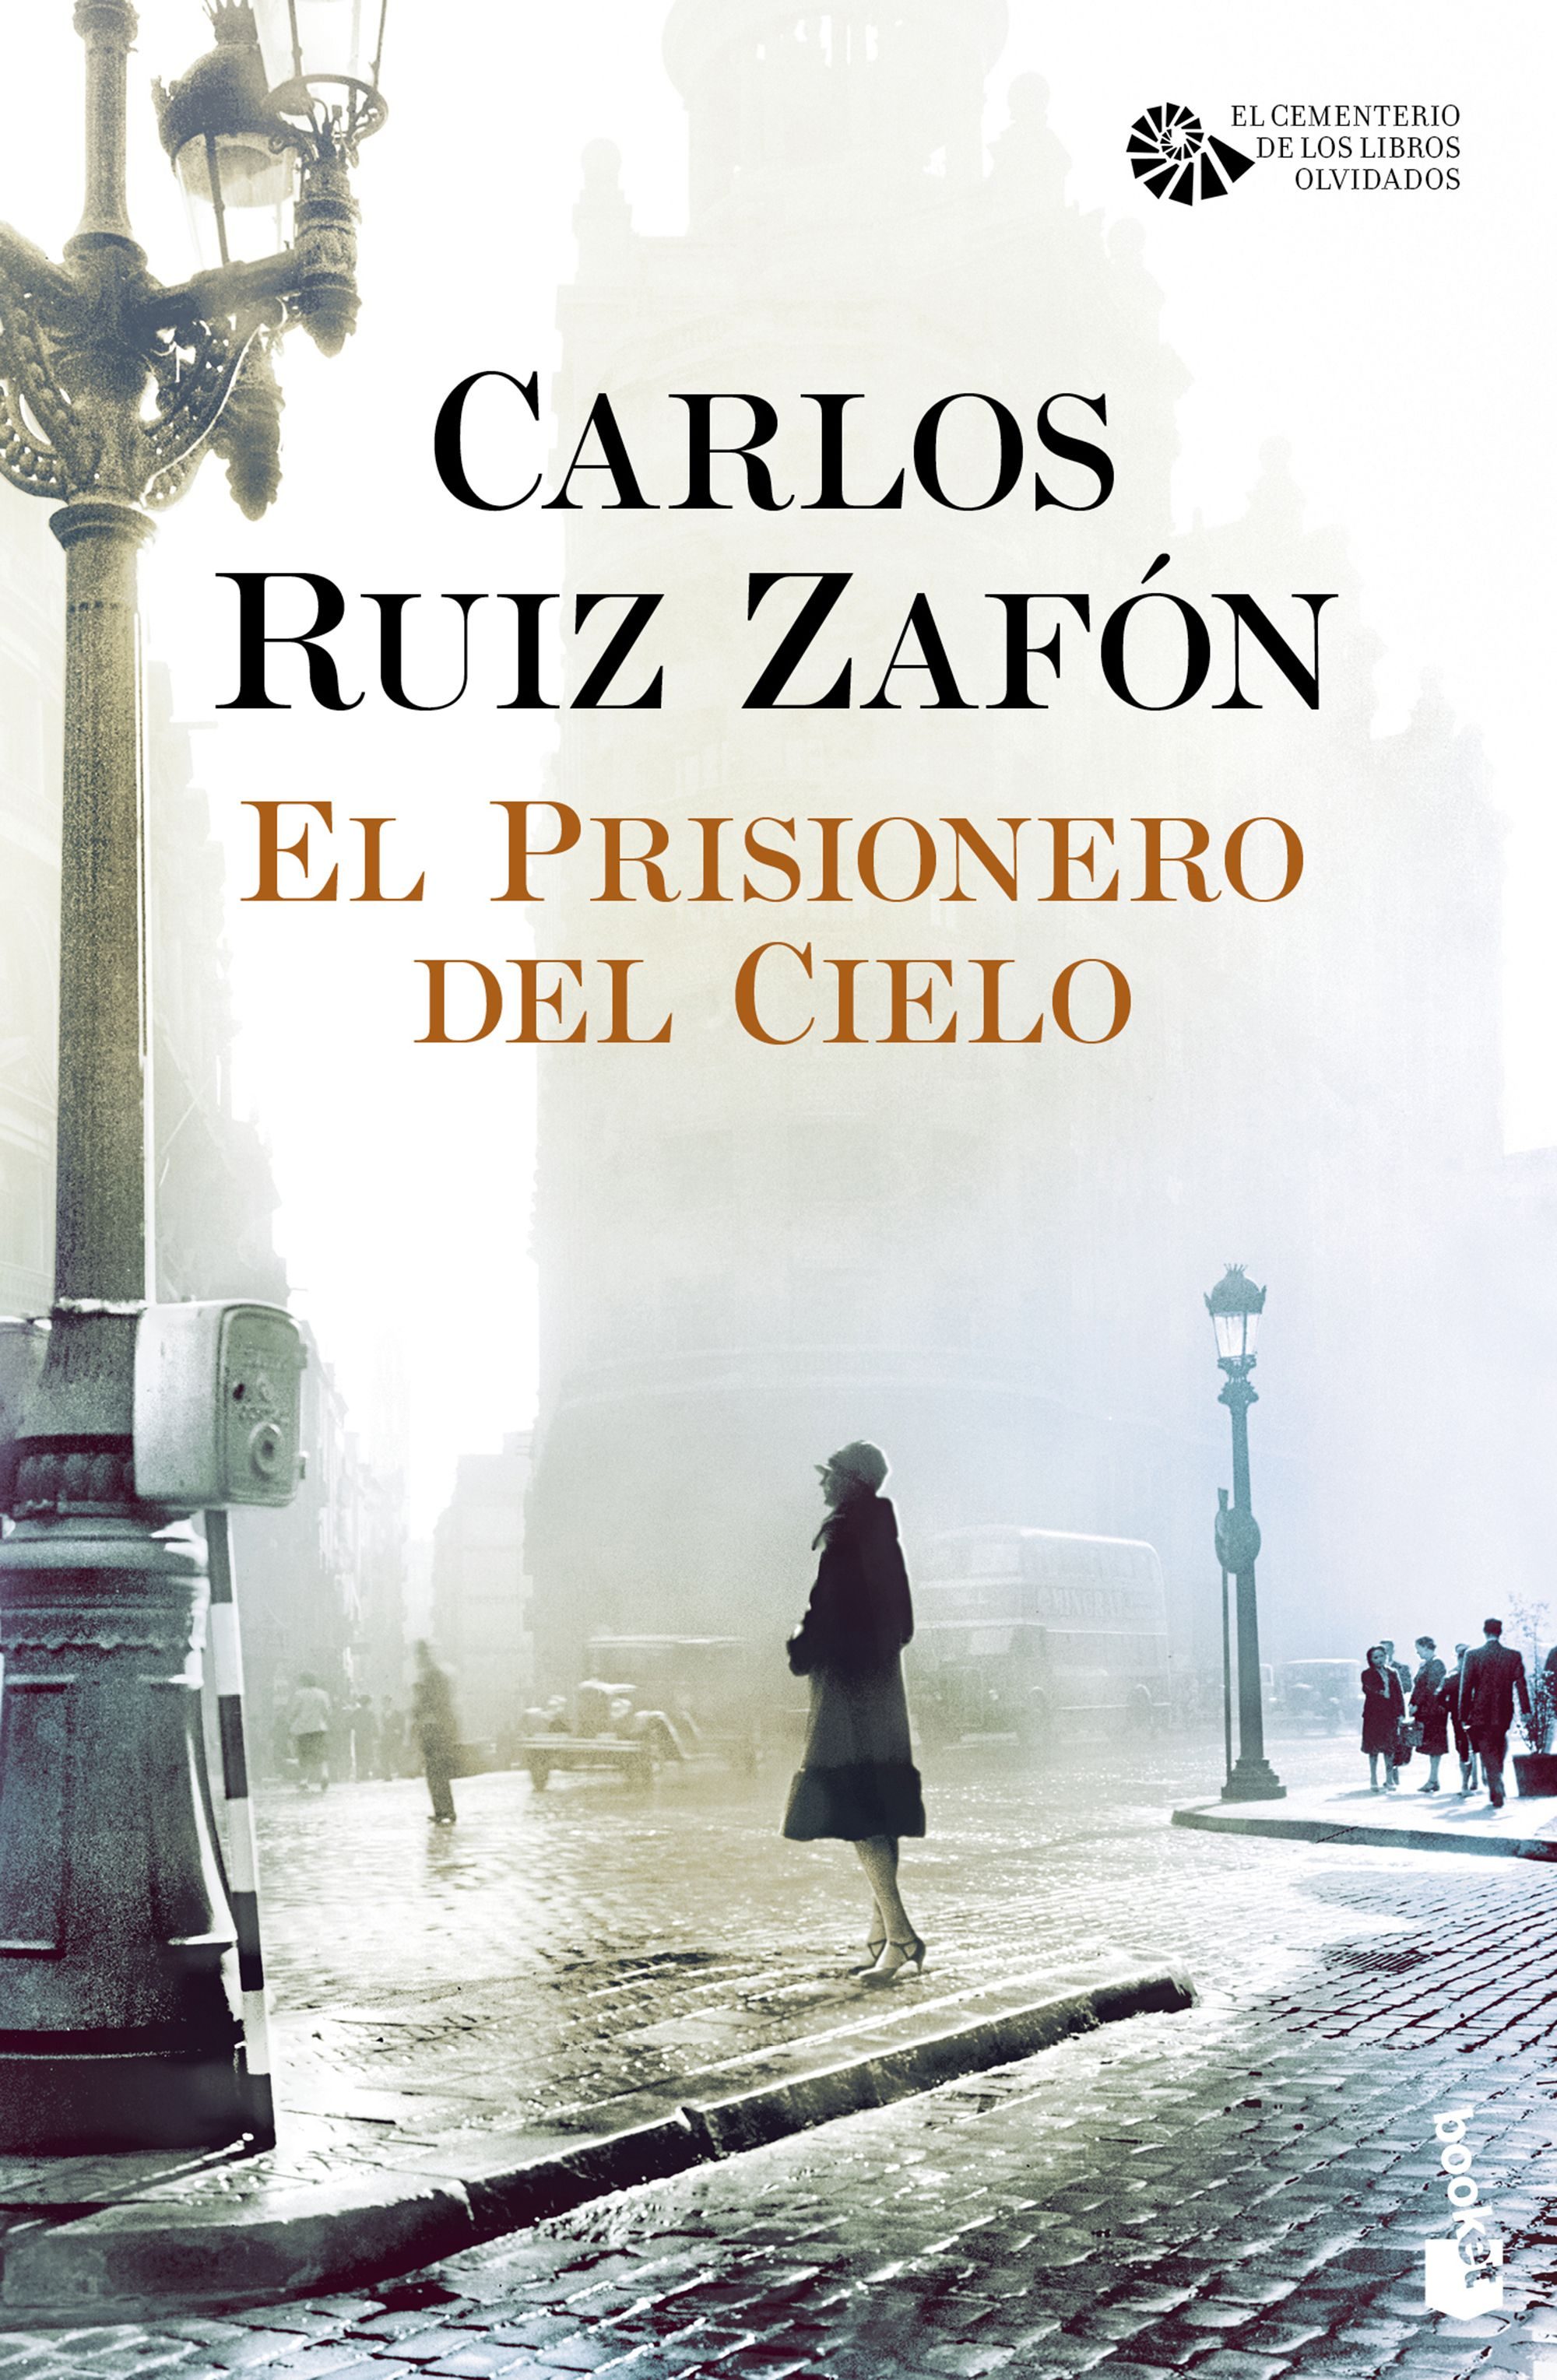 La Barcelona gótica de Zafón, Óscar Beltrán, Ruiz Zafón, laberinto, reseña de libros, cuarta